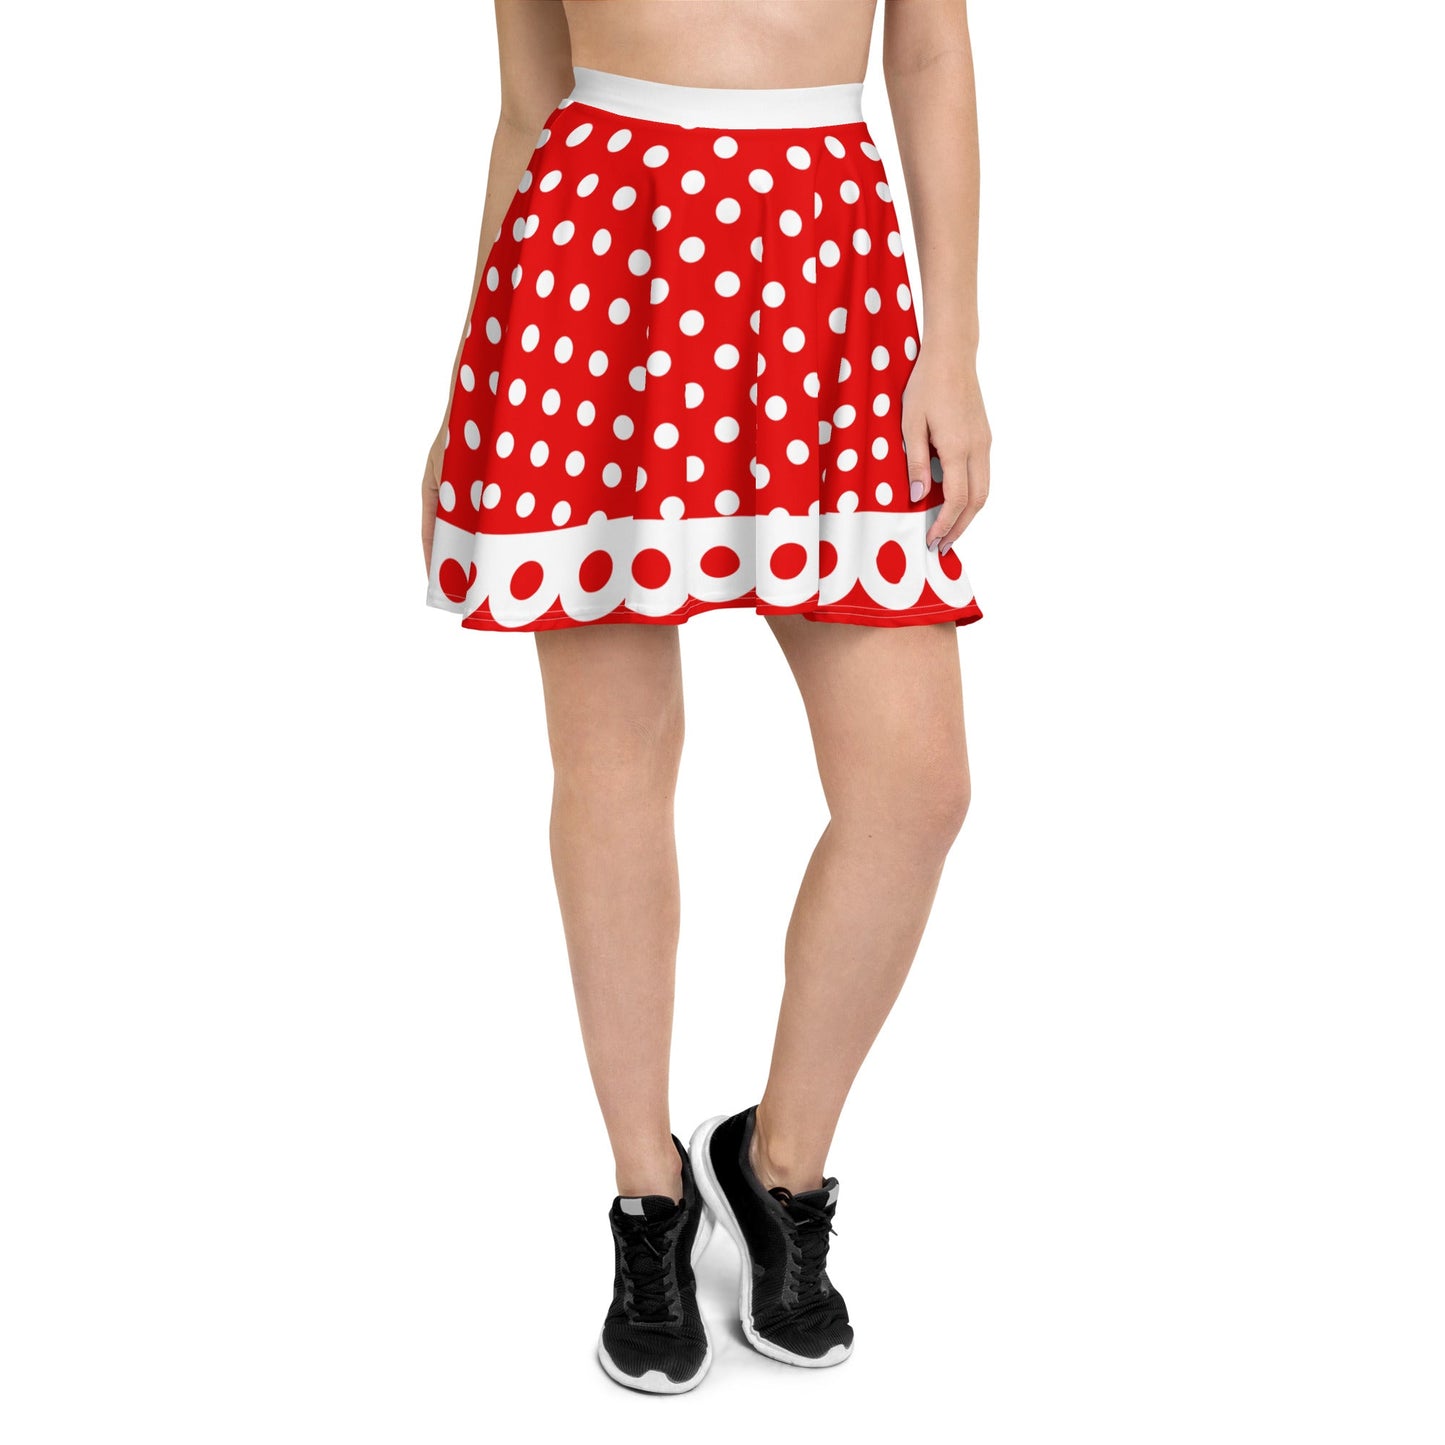 Mrs. Mouse Skater Skirt 100 years of wonderdisney costumedisney family styles#tag4##tag5##tag6#